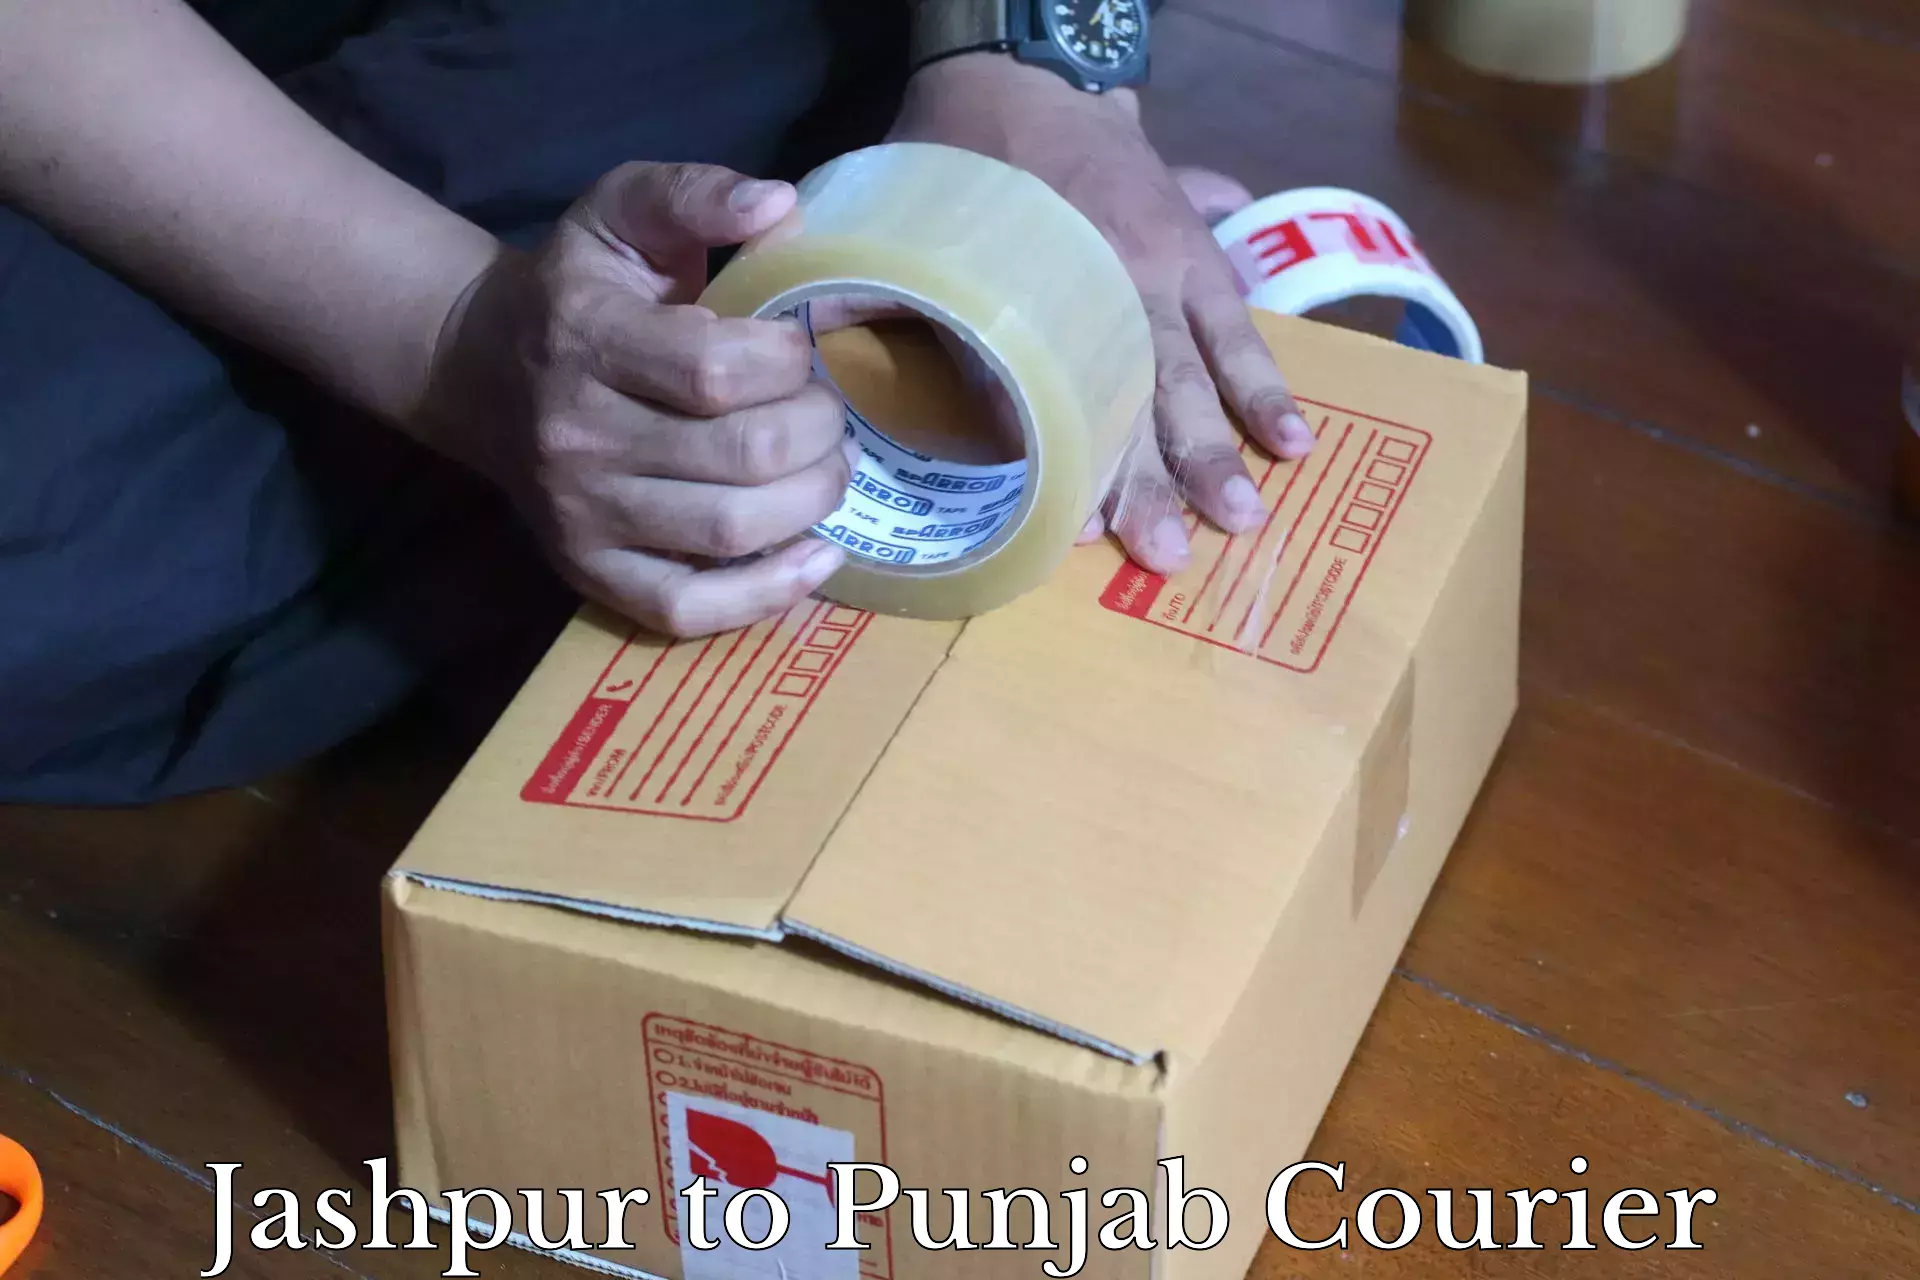 Courier service innovation Jashpur to Dhuri